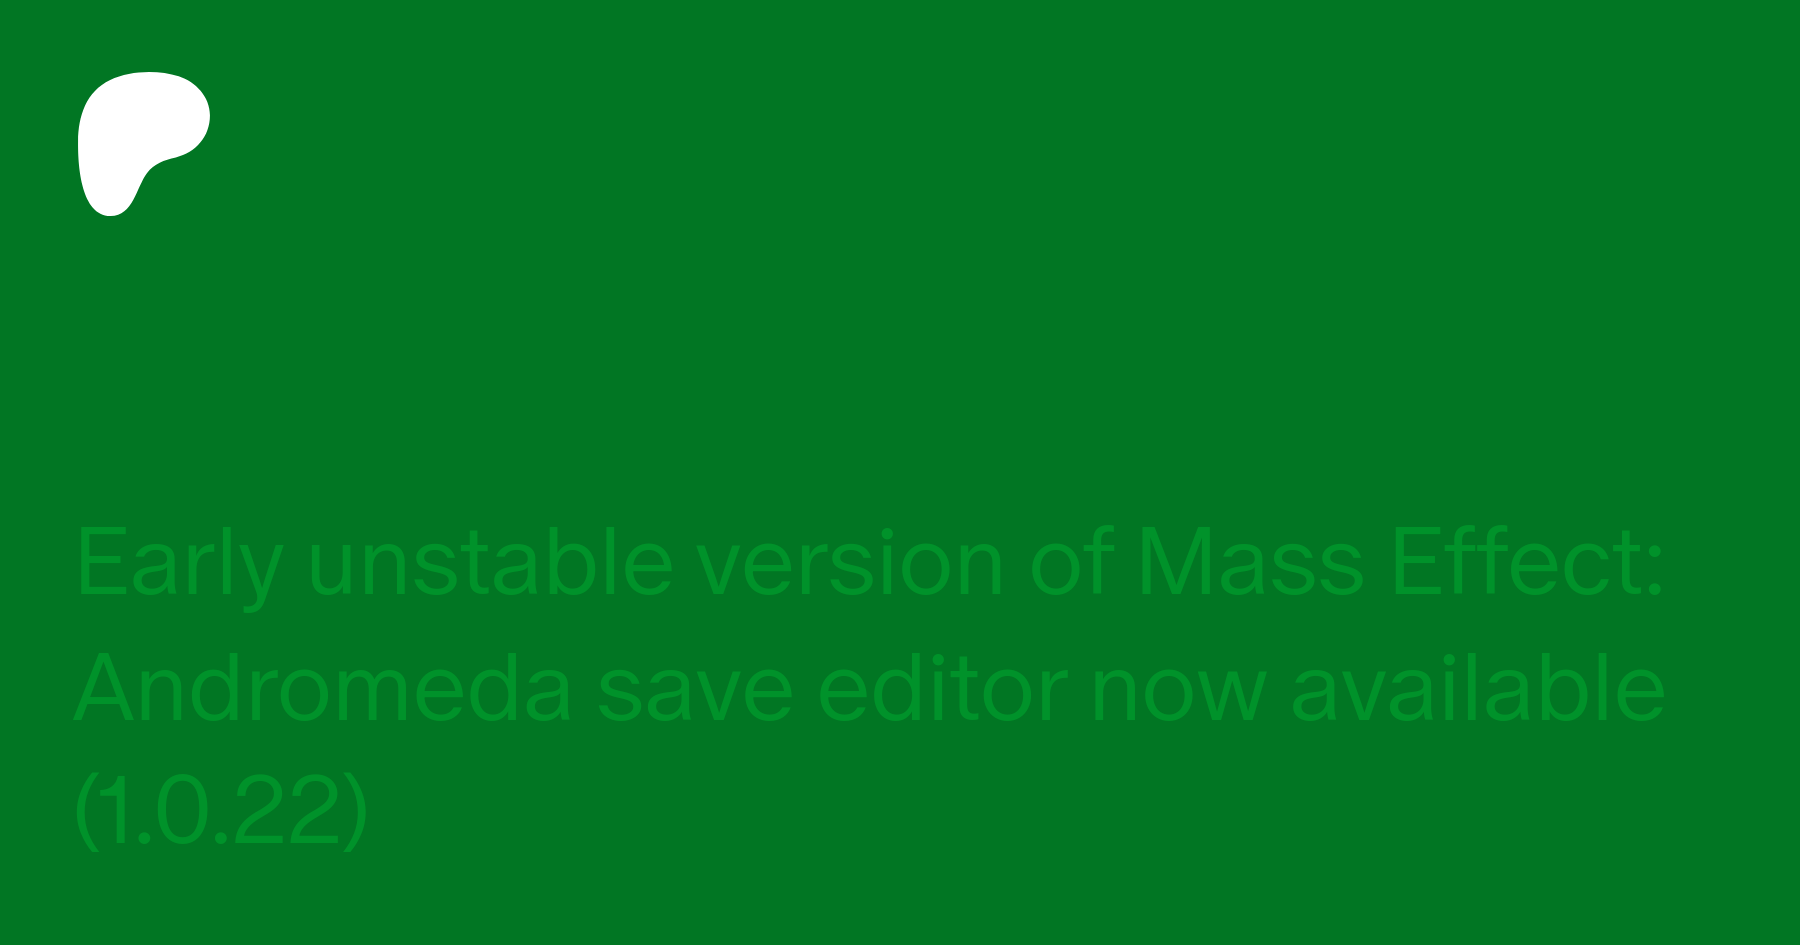 Mass effect 3 save editor